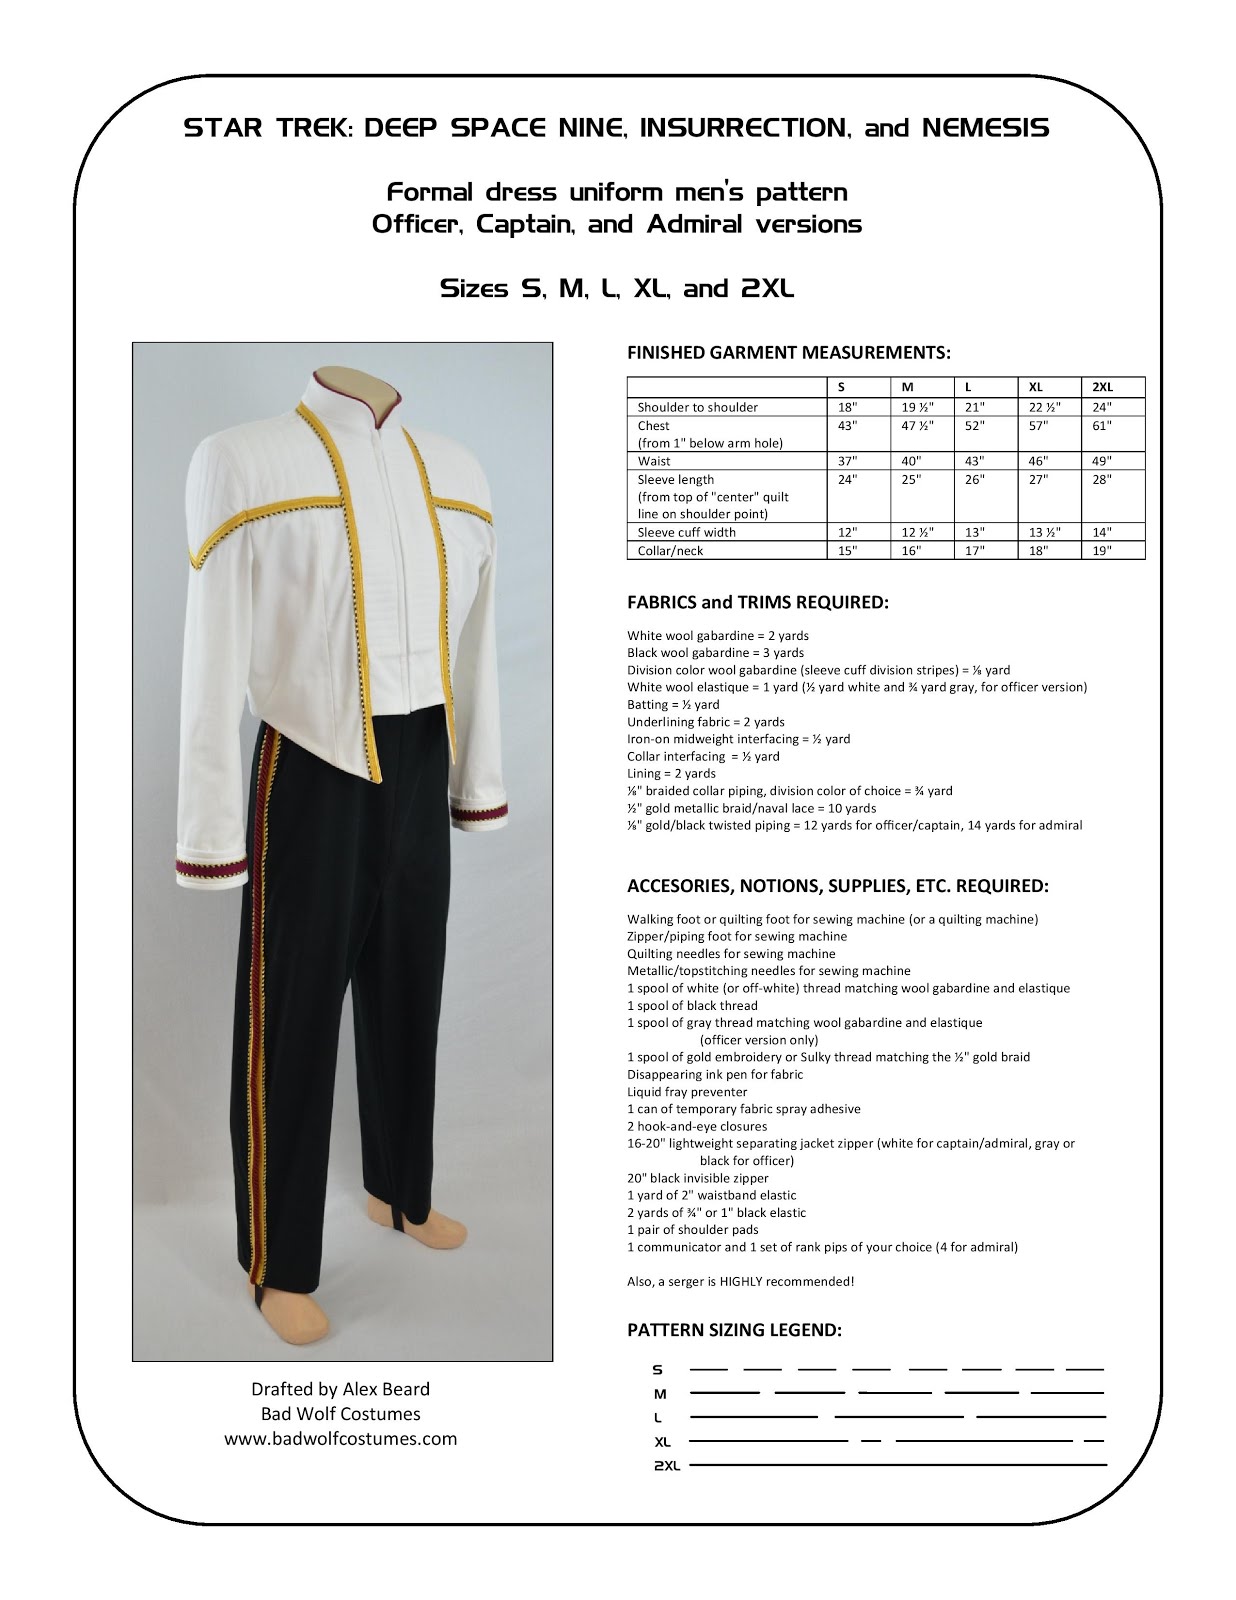 Star Trek: DS9/NEM Men's Formal Uniform Sewing Pattern